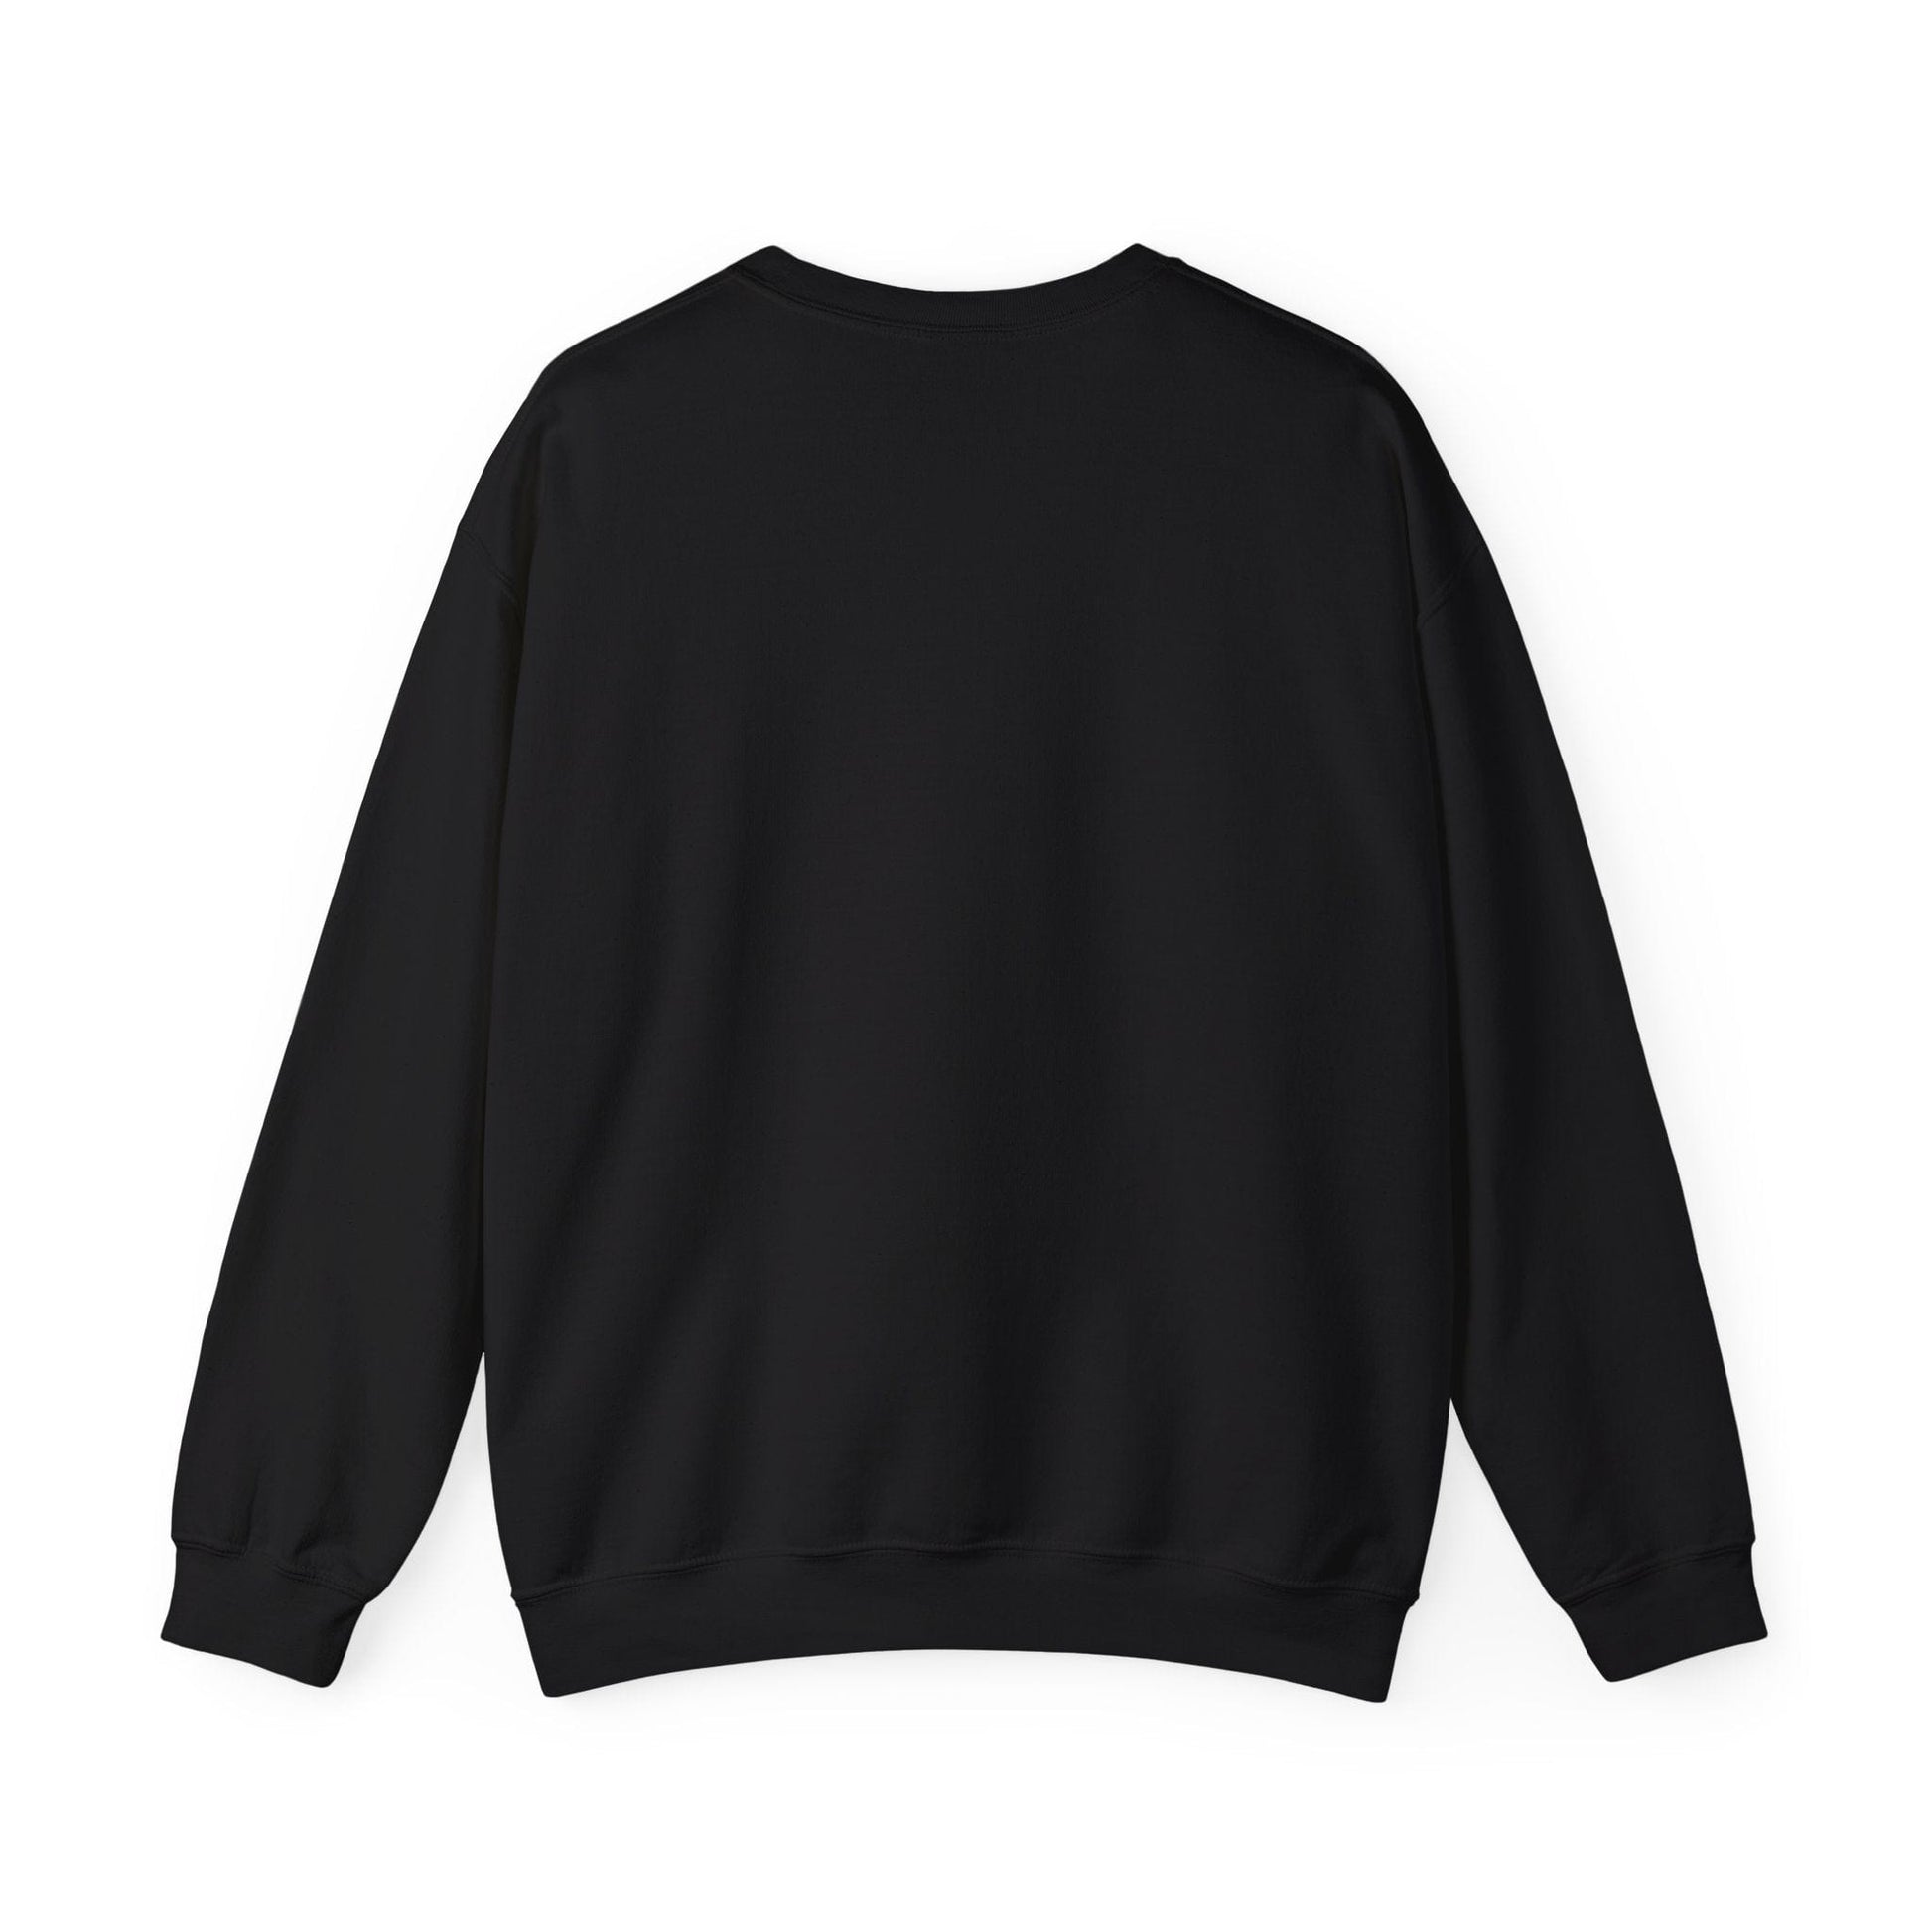 Sweatshirt Celestial Duet Gemini Sweater: Harmonized Contrasts